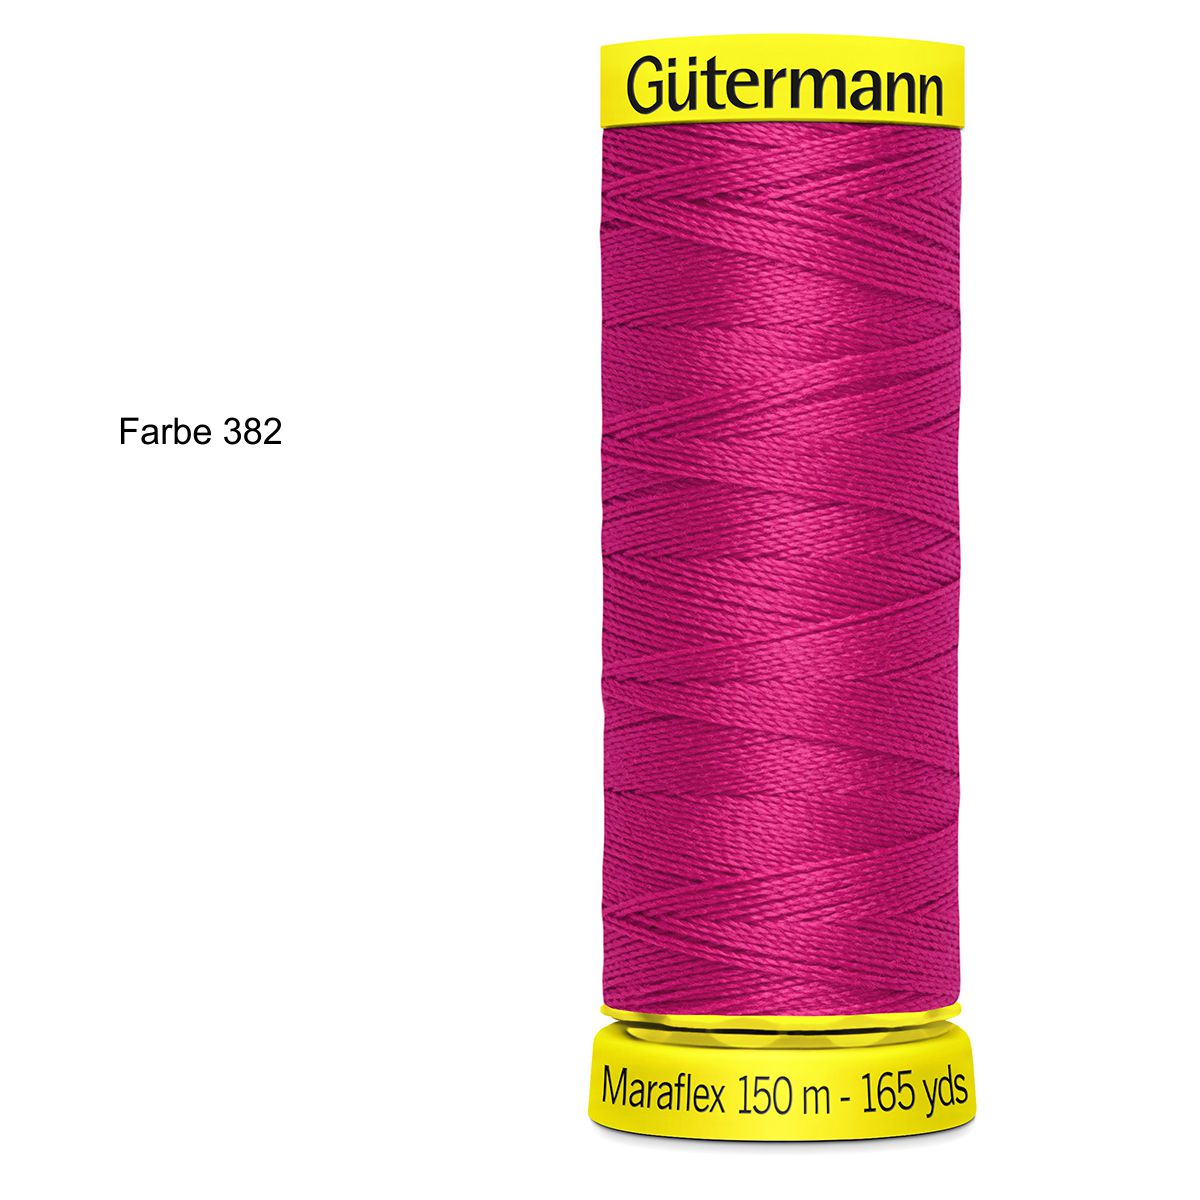 Gütermann Maraflex Elastic- Nähgarn 150m Farbe 382